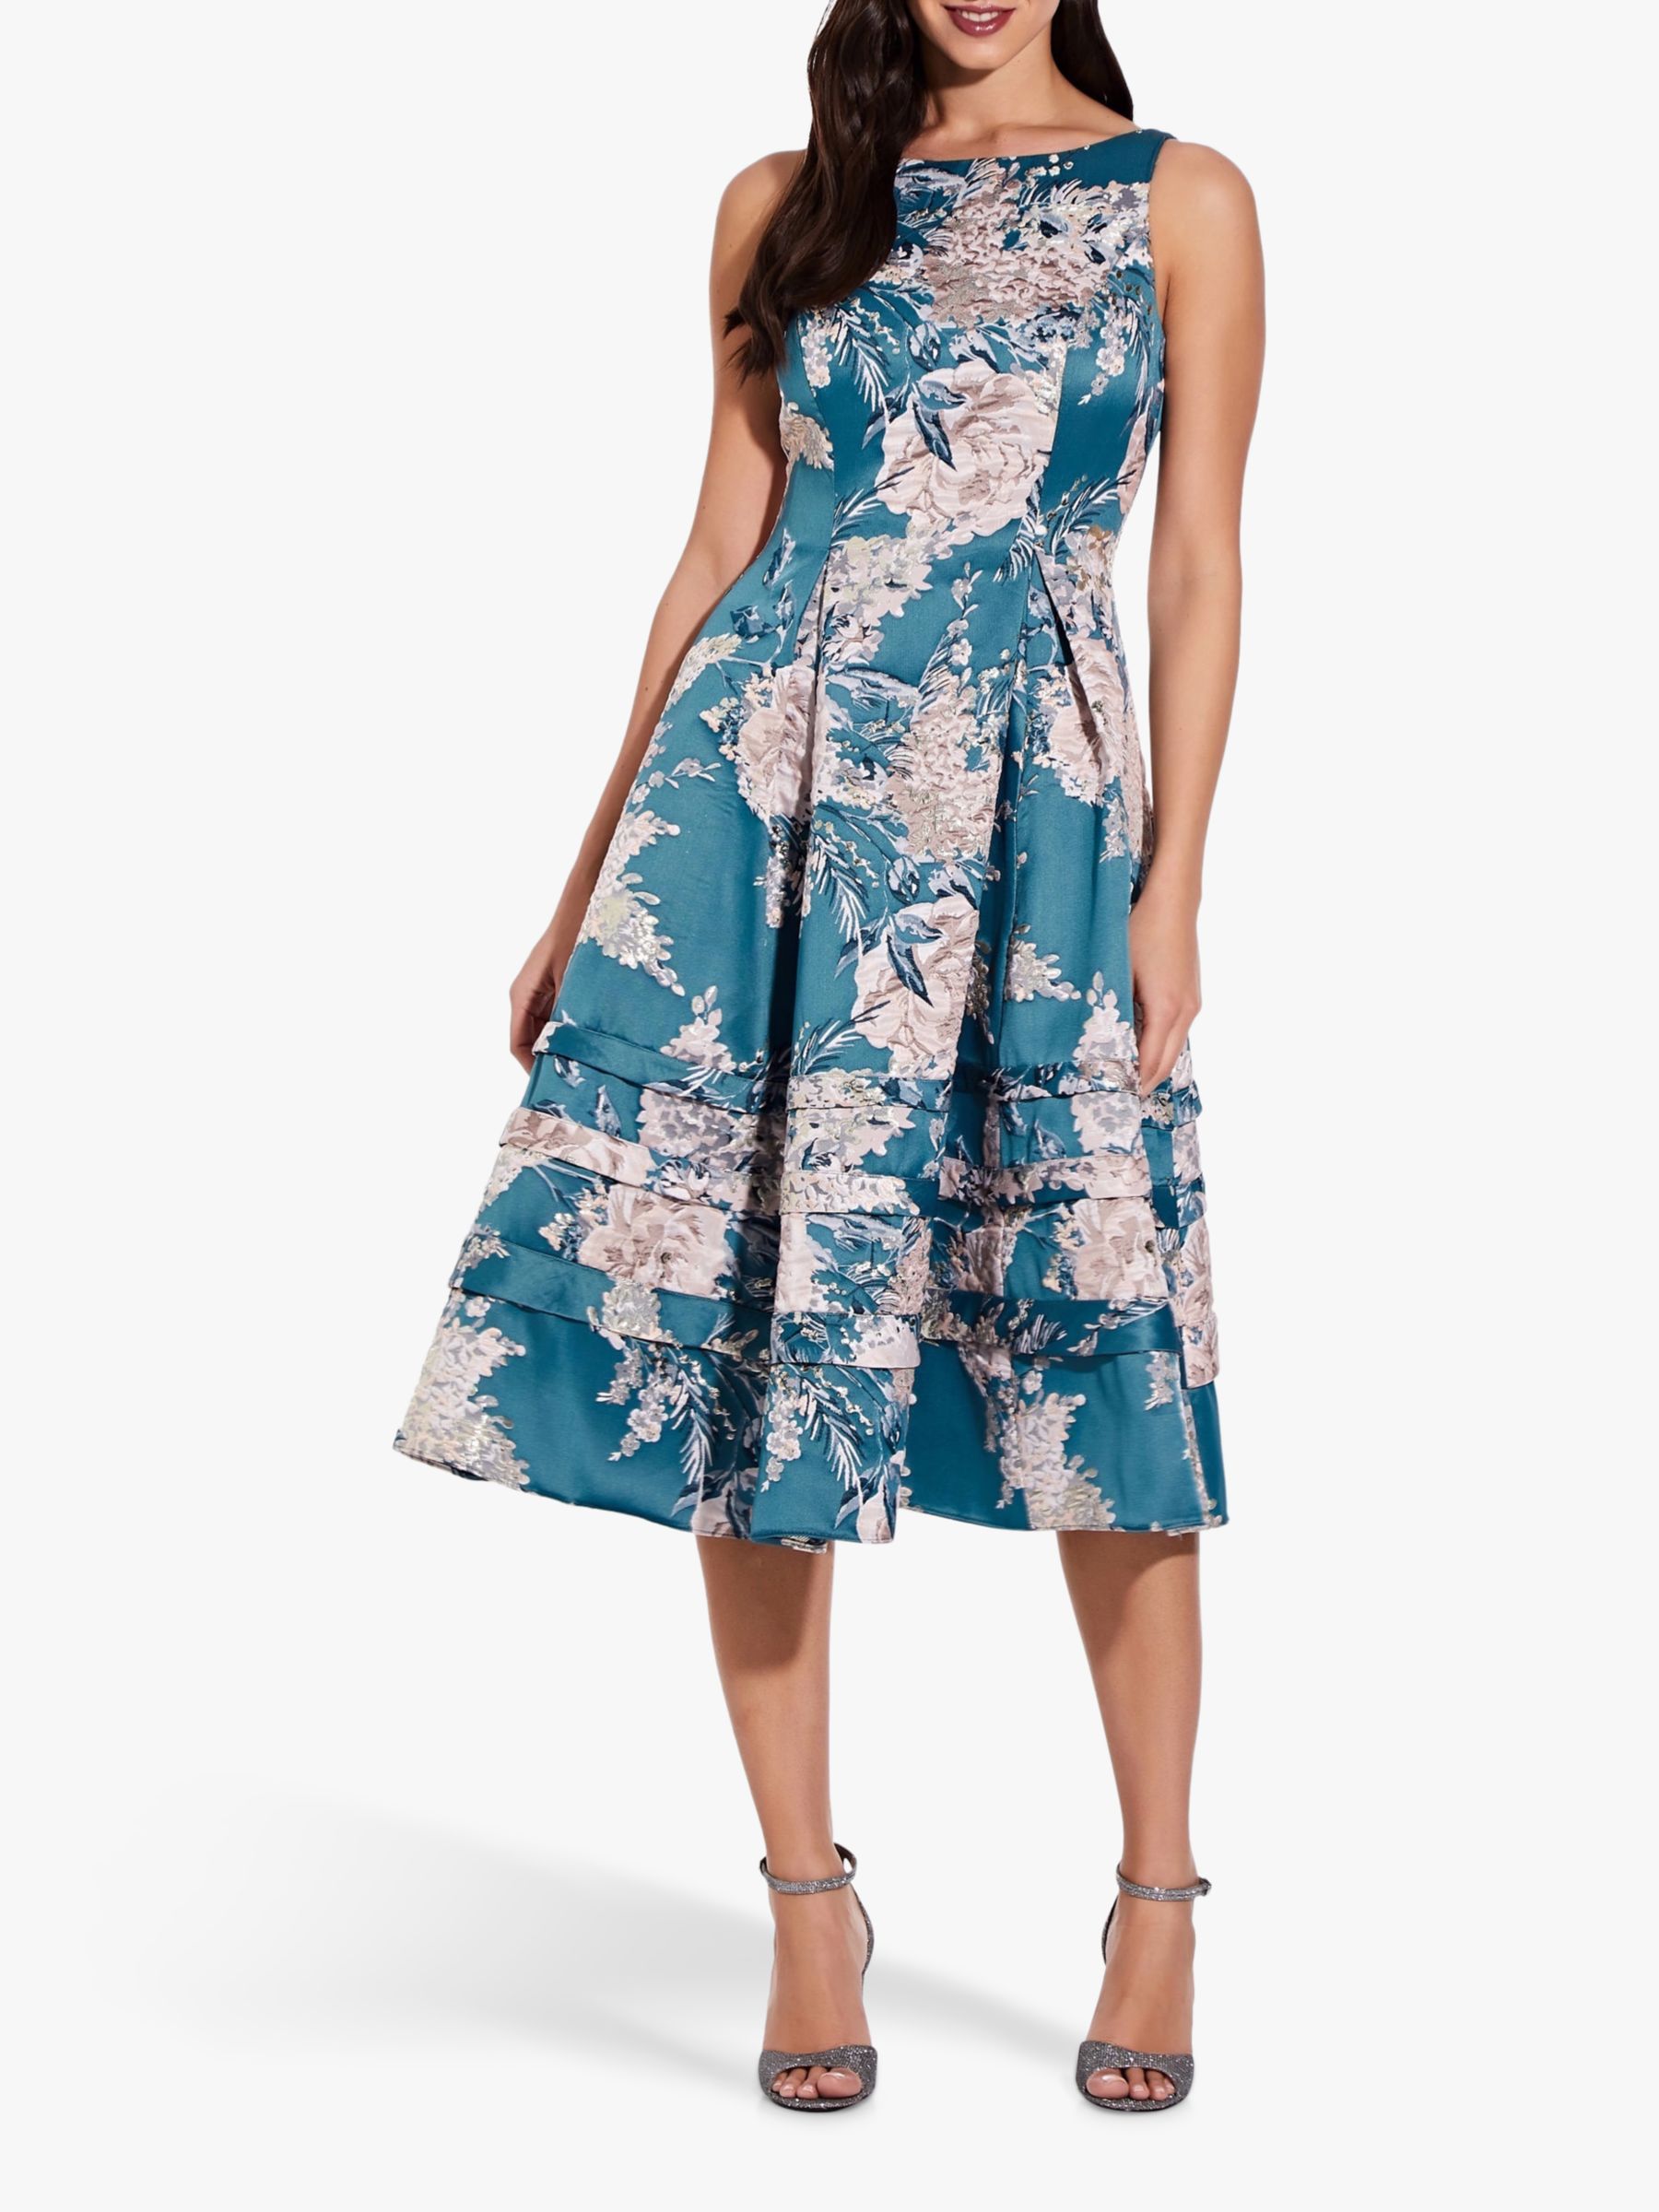 Adrianna Papell Jacquard Floral Print Flared Midi Dress, Teal/Multi